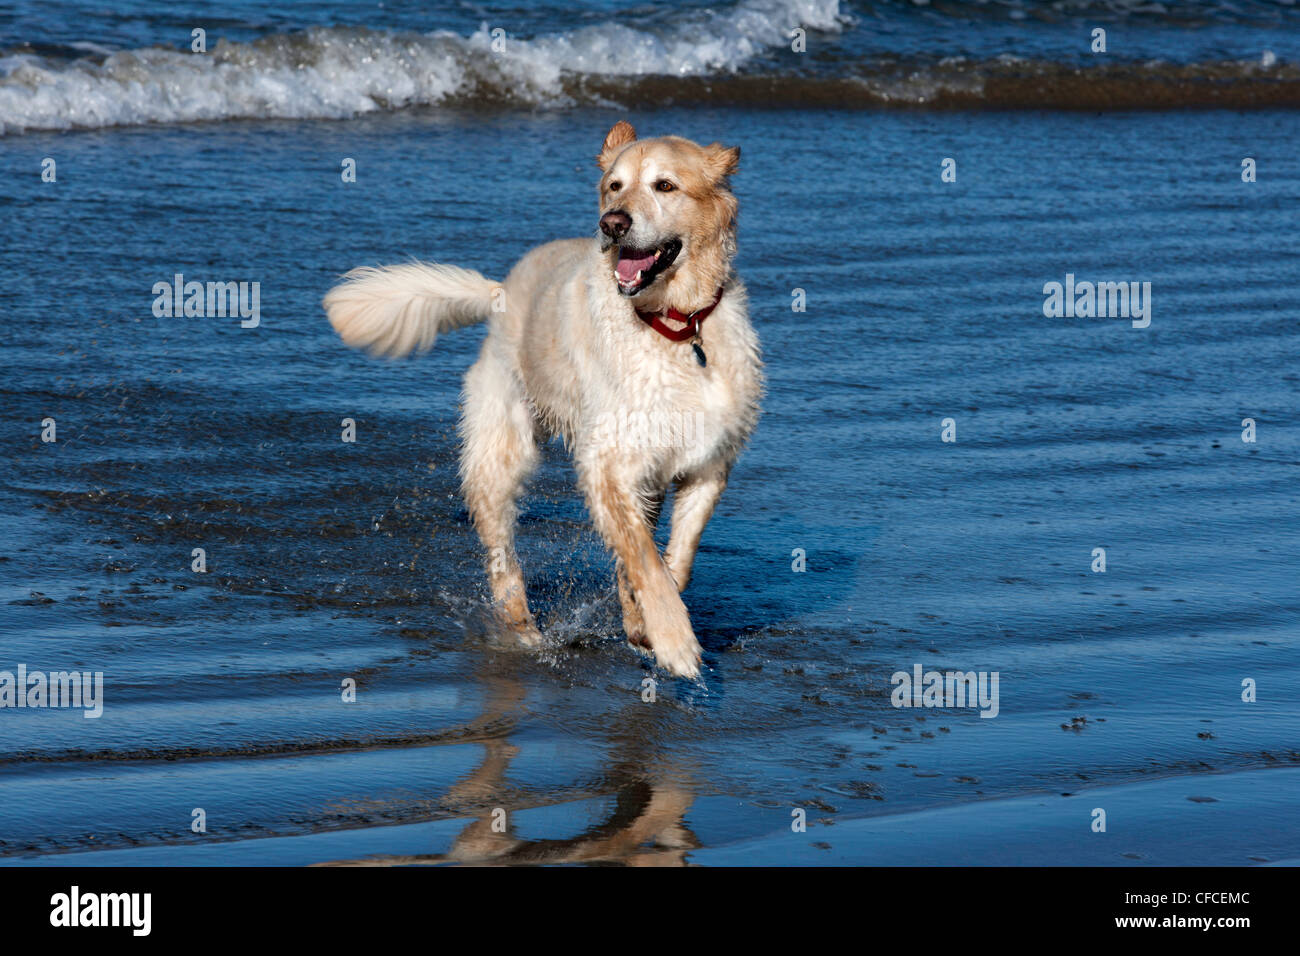 Excited Golden Retriever runs in ocean surf Stock Photo